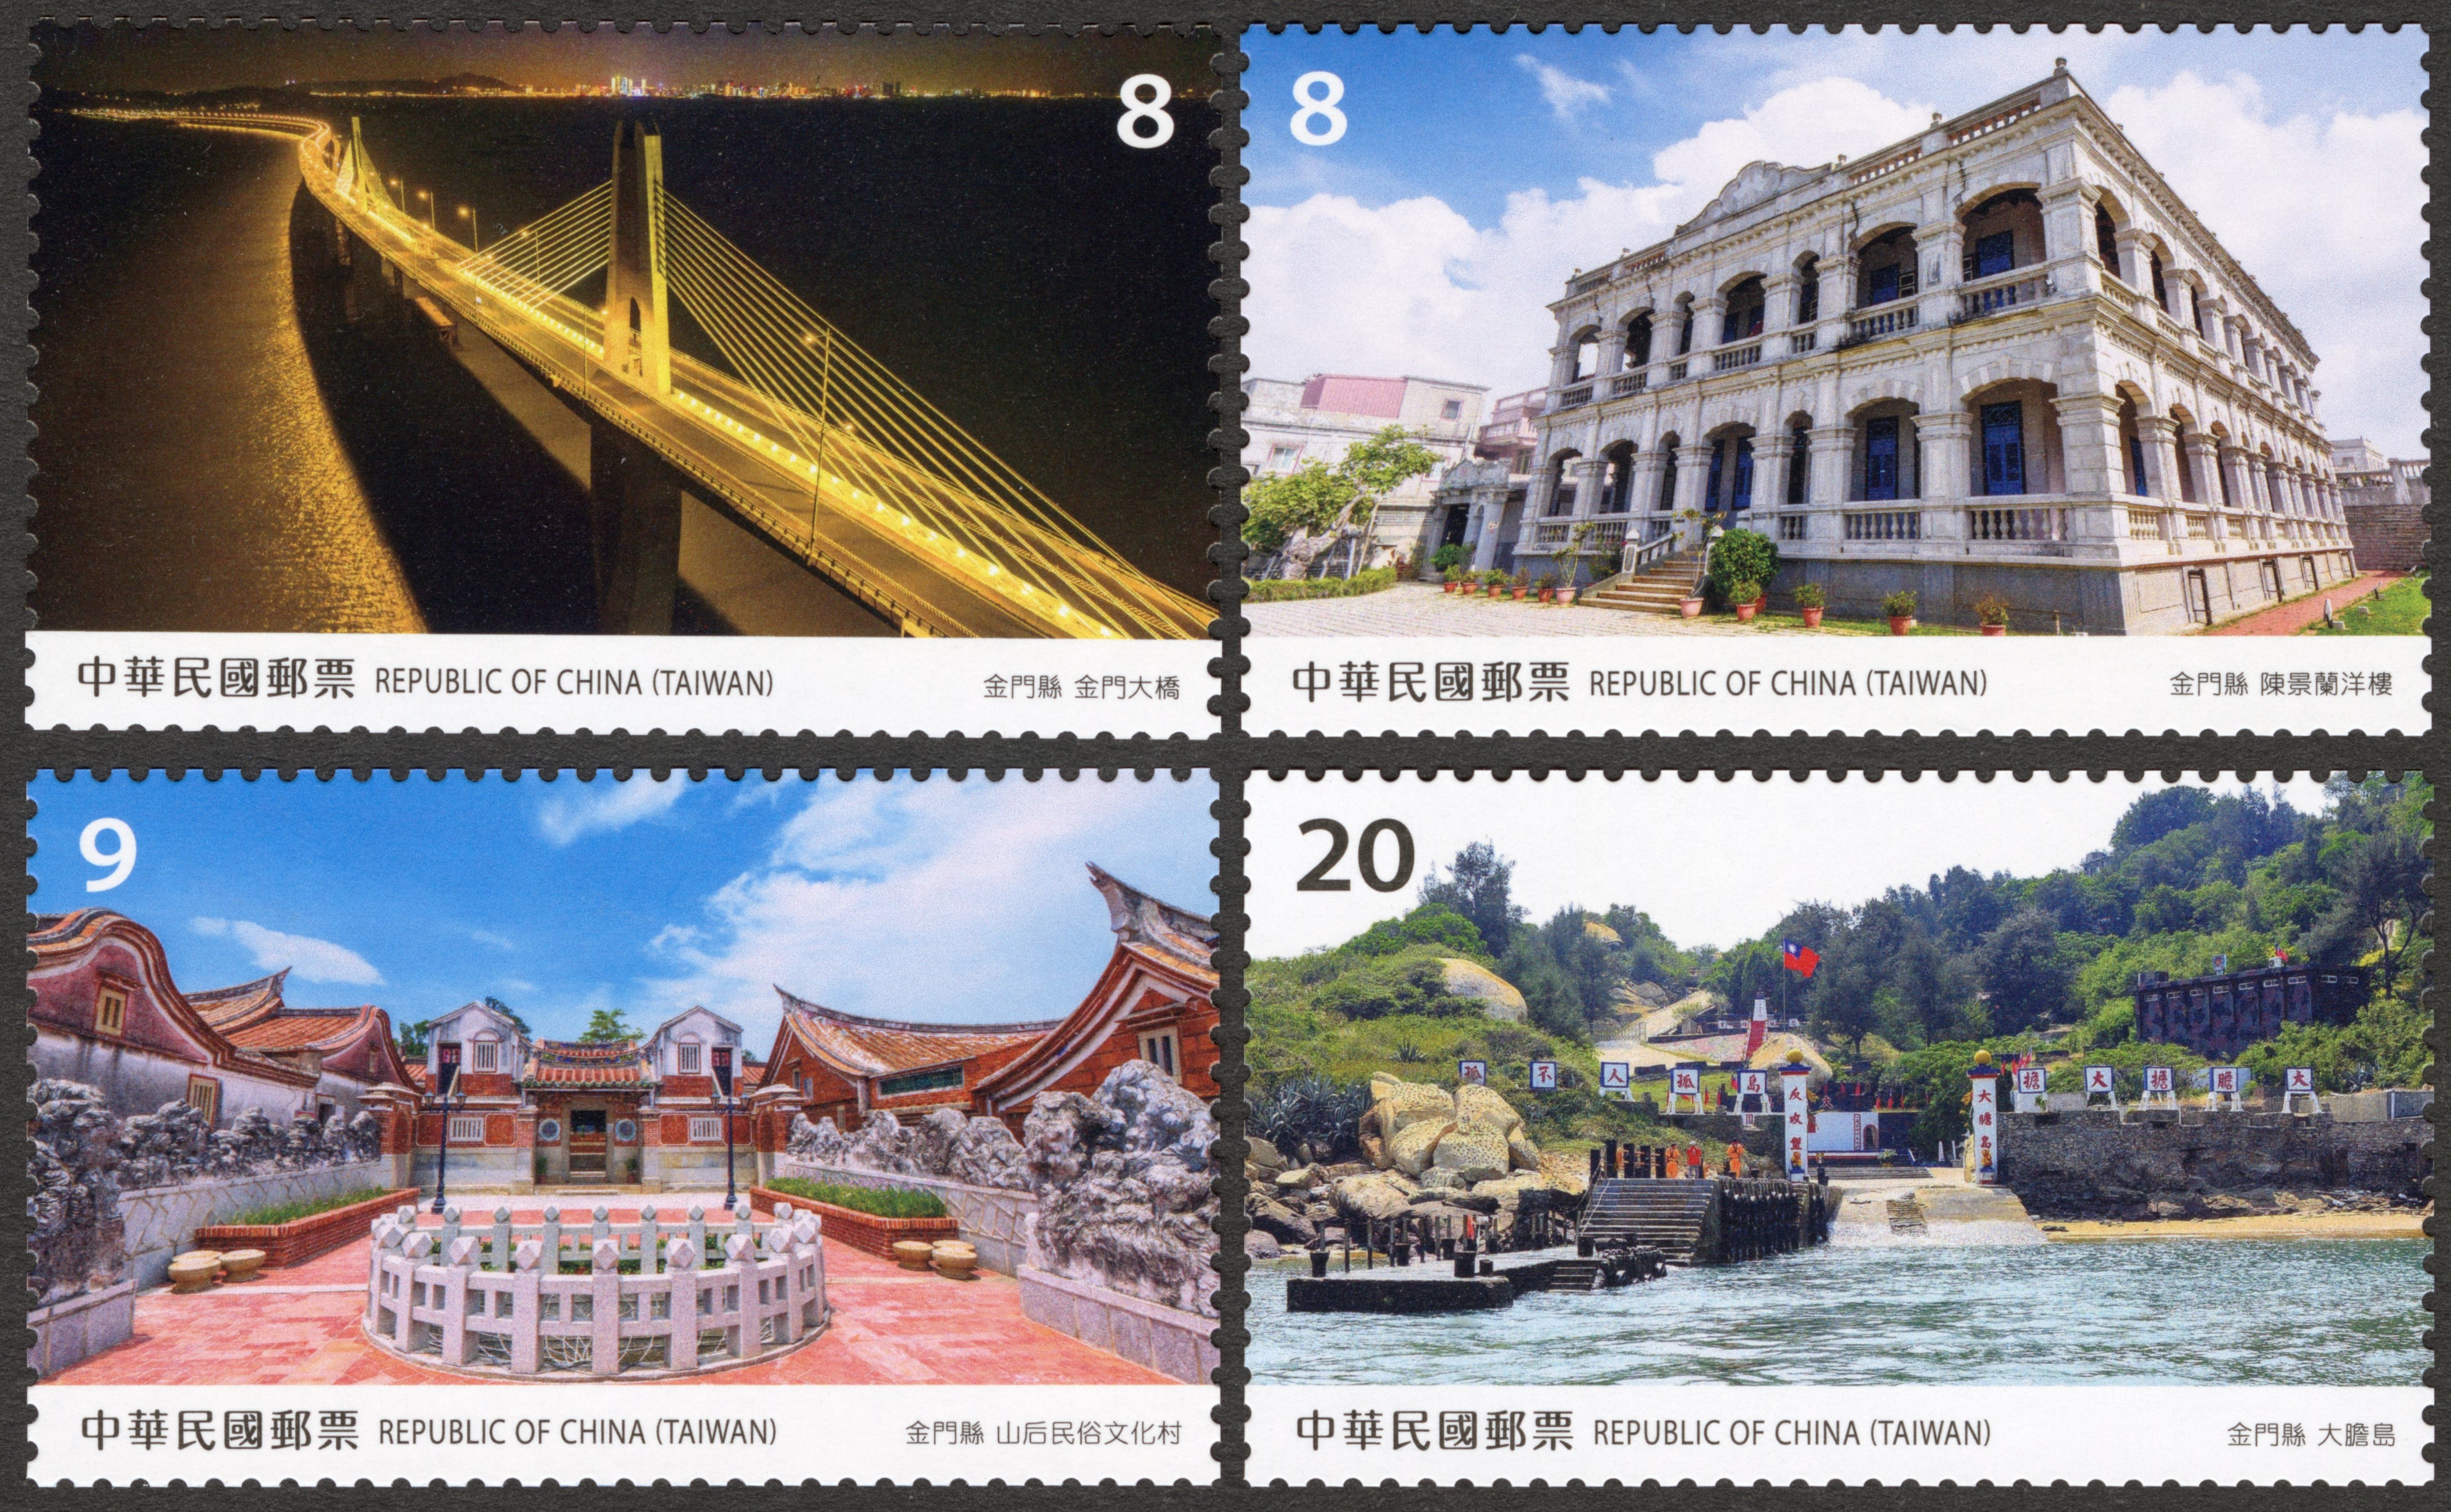 Taiwan Scenery Postage Stamps — Kinmen County